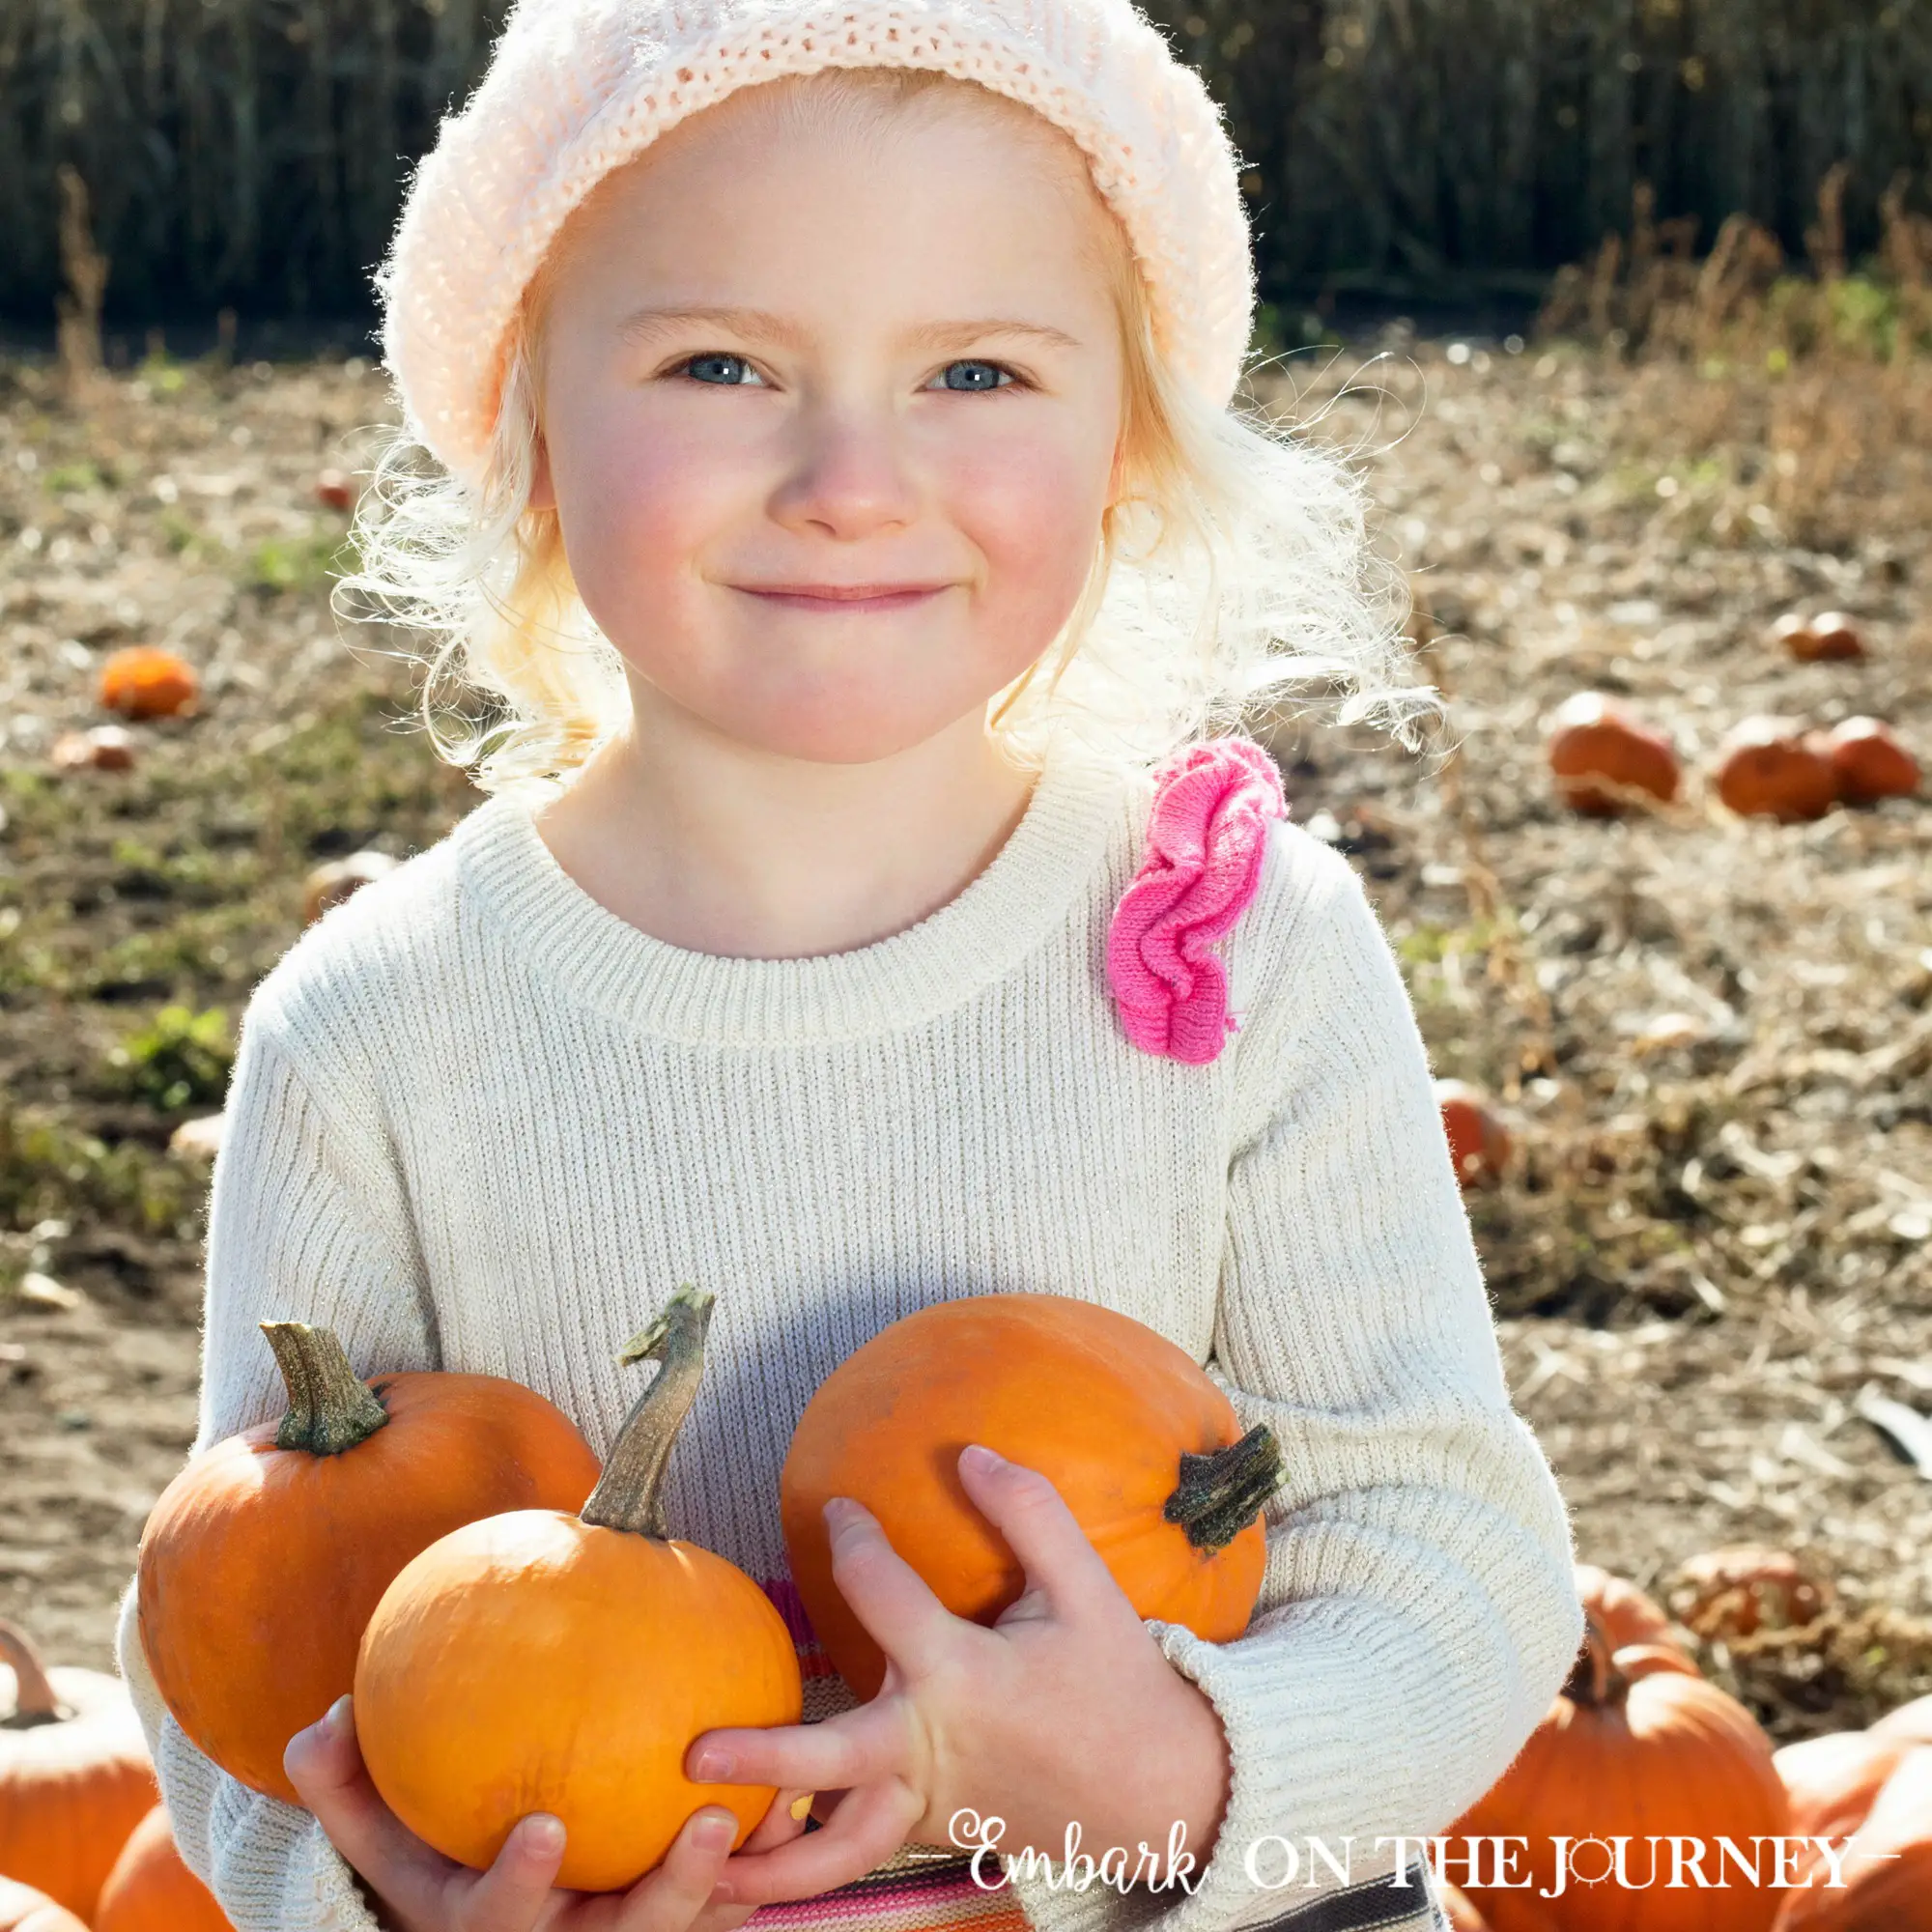 Amazing Pumpkin Science for Kids